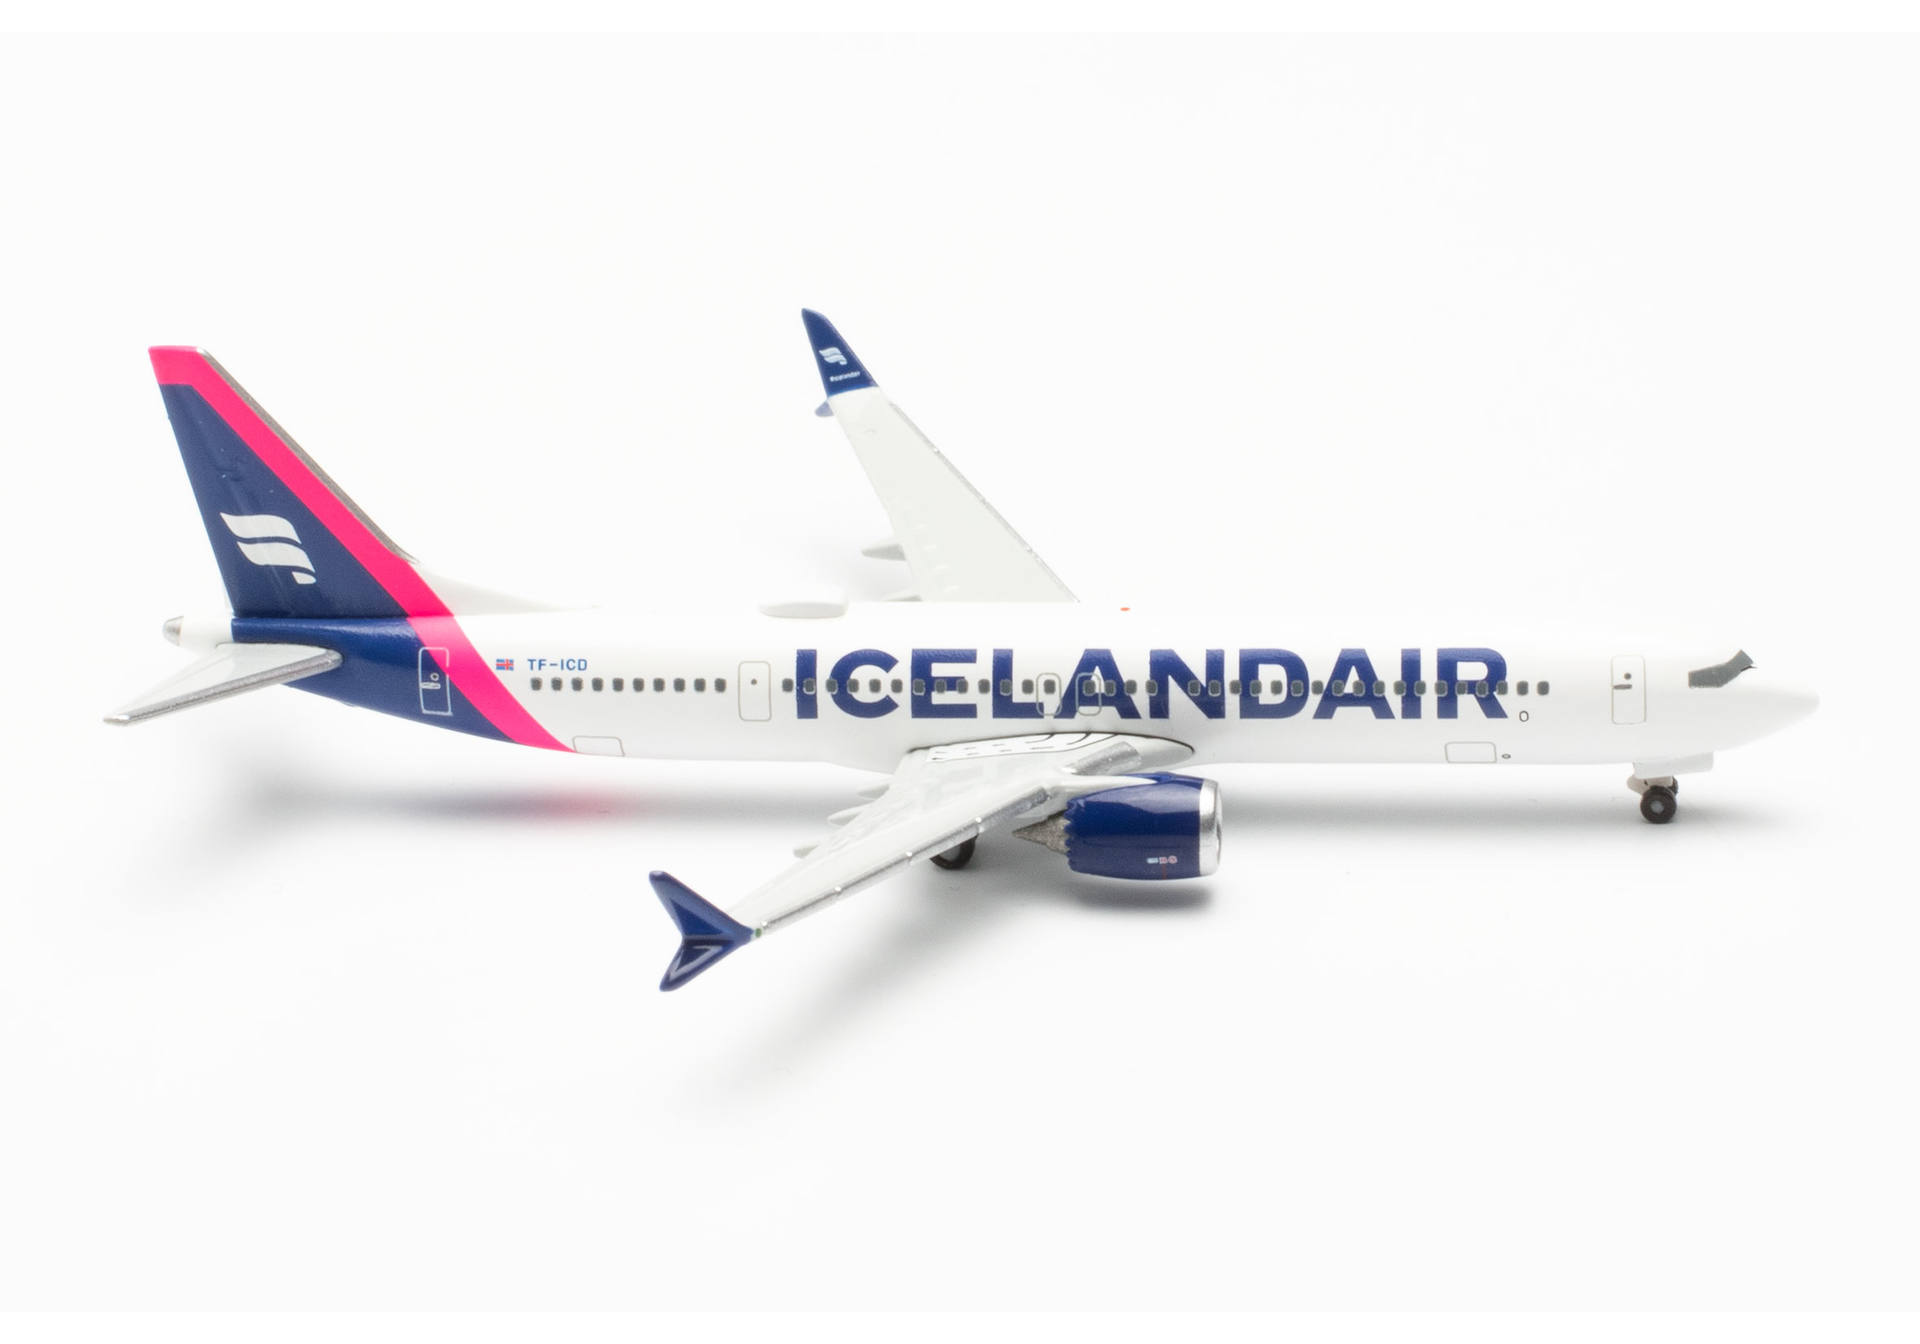 Icelandair Boeing 737 Max 9 - magenta tail stripe - TF-ICD "Baula"